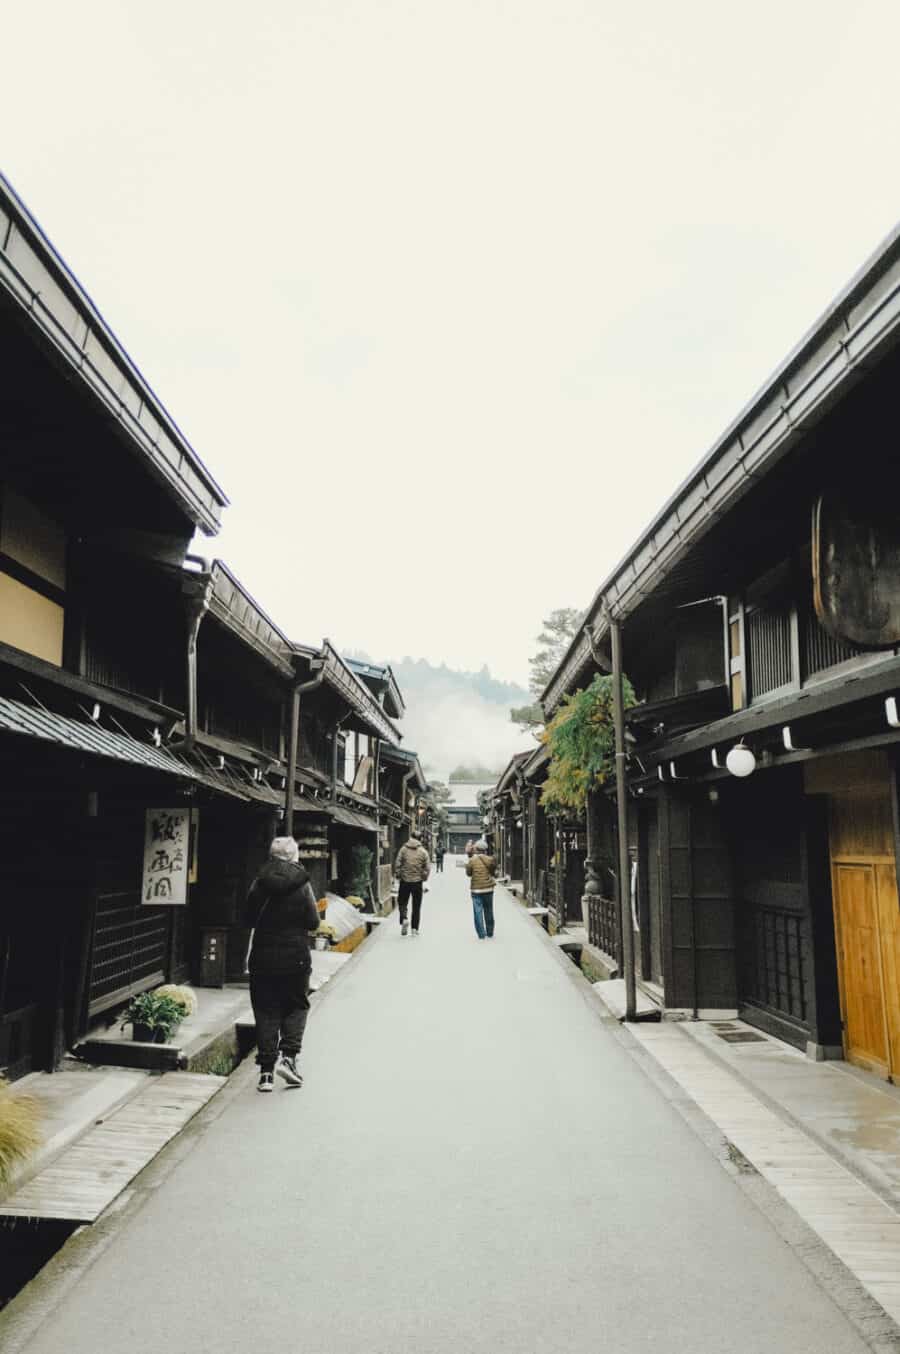 Coco Tran — Aesthetic Travel Blog By Film Photographer Coco Tran https://cocotran.com/hida-folk-village-takayama/